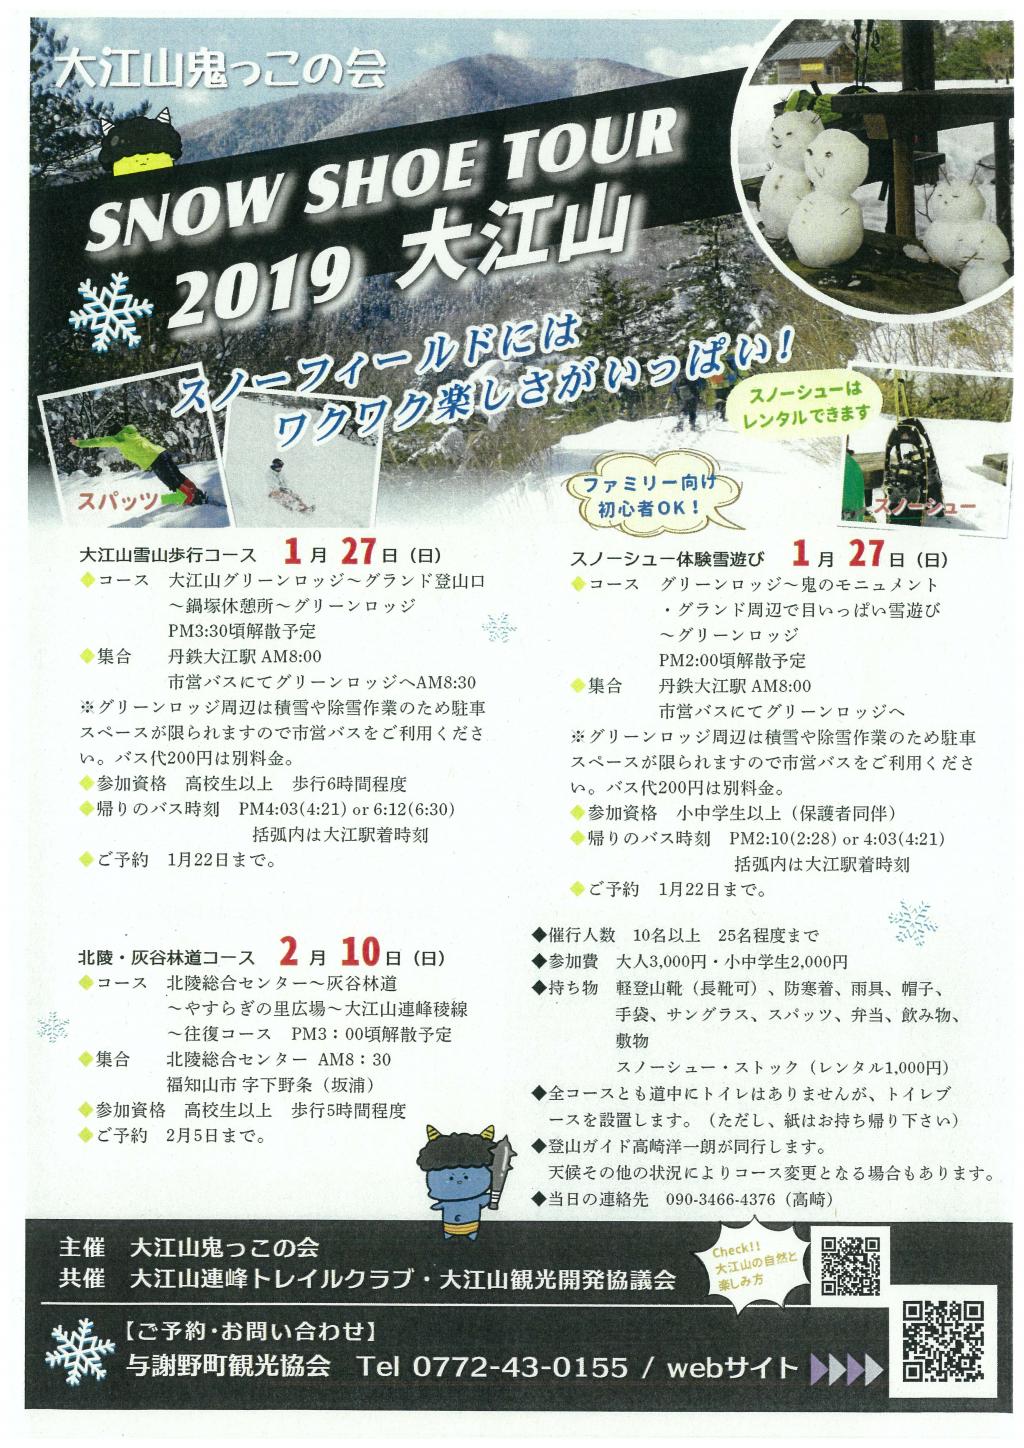 SNOW SHOE TOUR 2019大江山募集參加者！